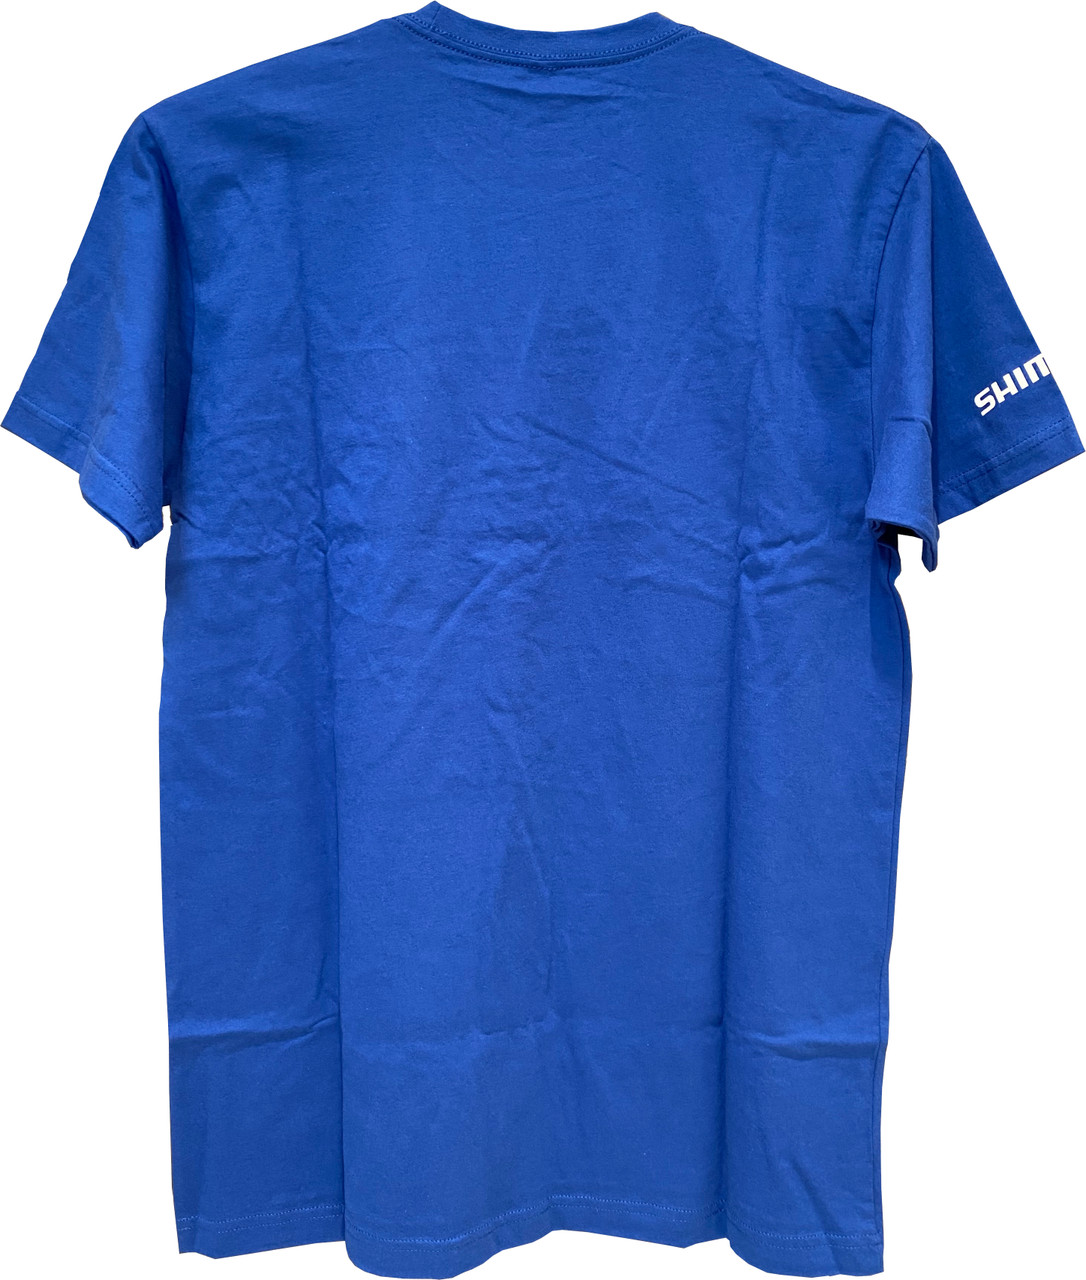 Shimano Short Sleeve Cotton Fishing Tee Shirt Royal Blue XL - ATEERSSSXLMRB  - Hunting Stuff